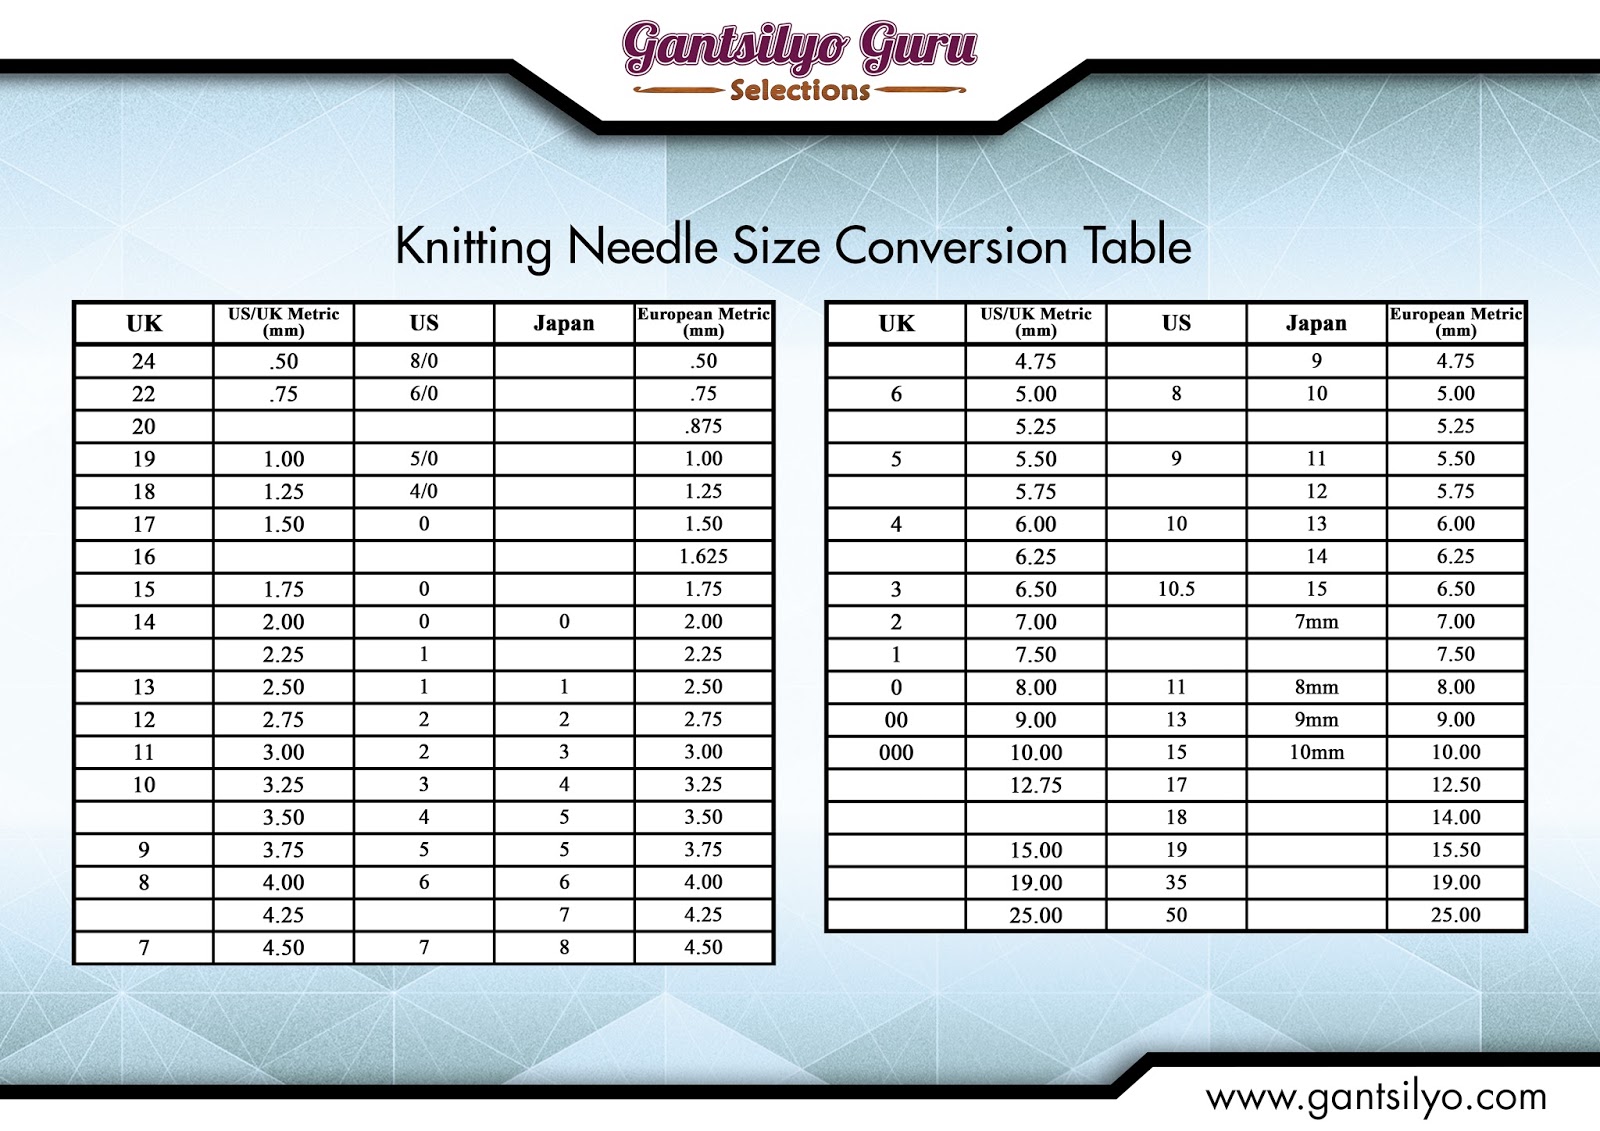 Steel Crochet Hook Sizes Conversion Chart